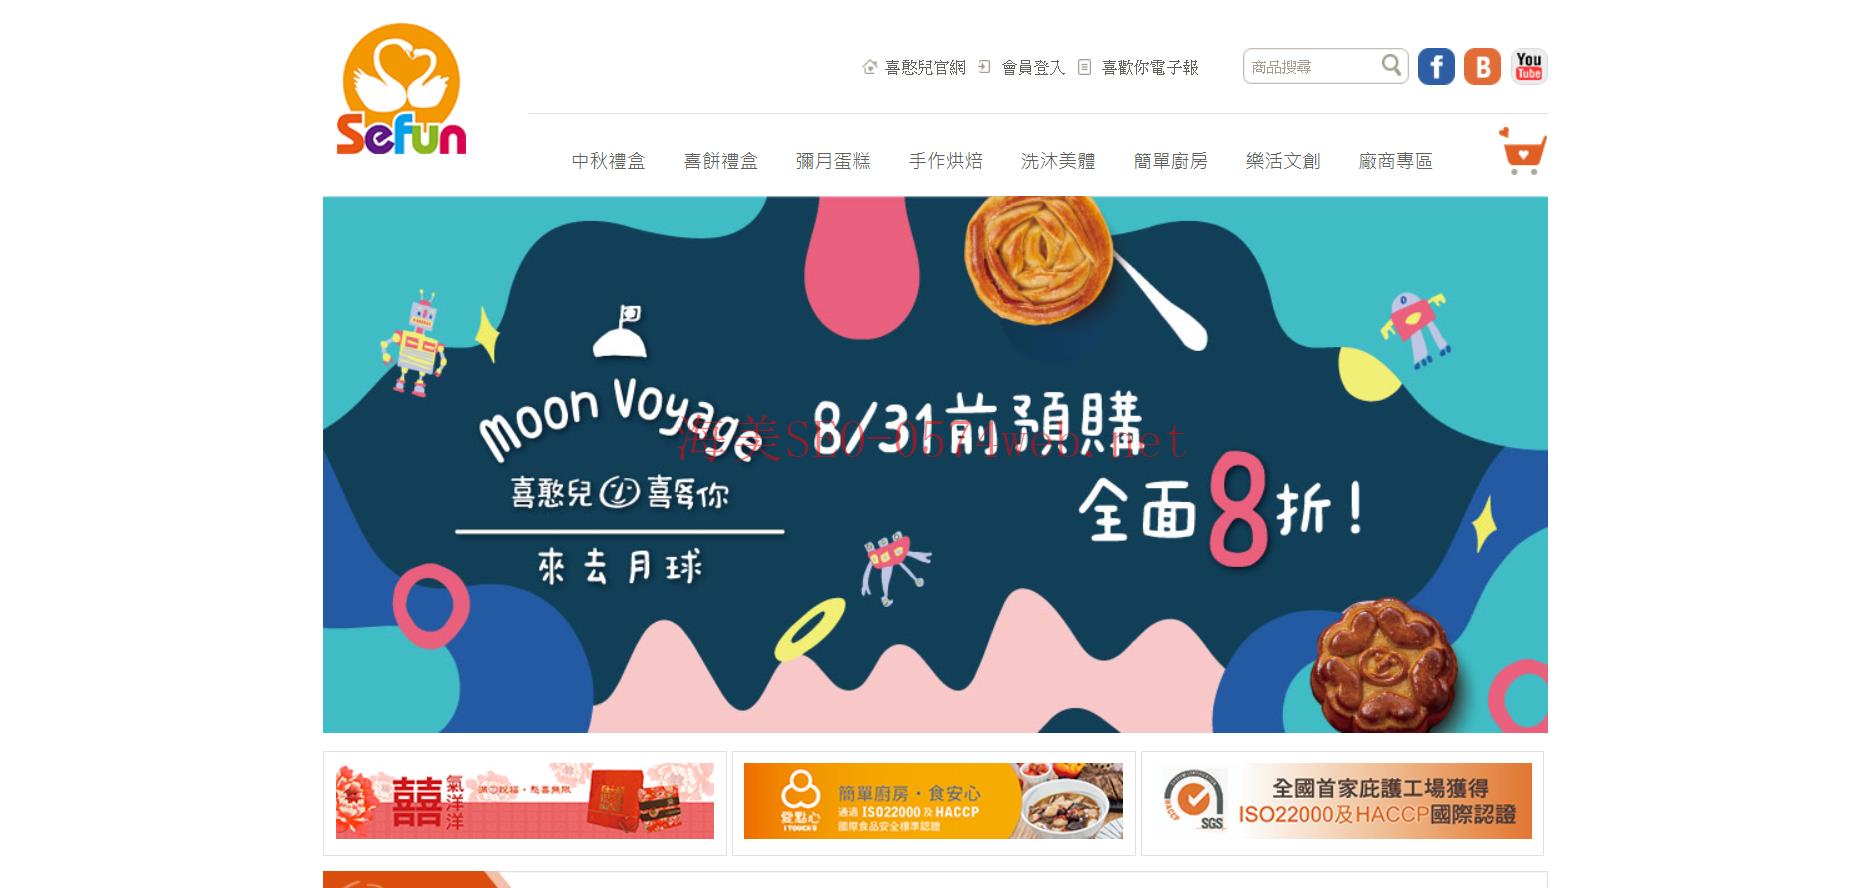 Sefun website